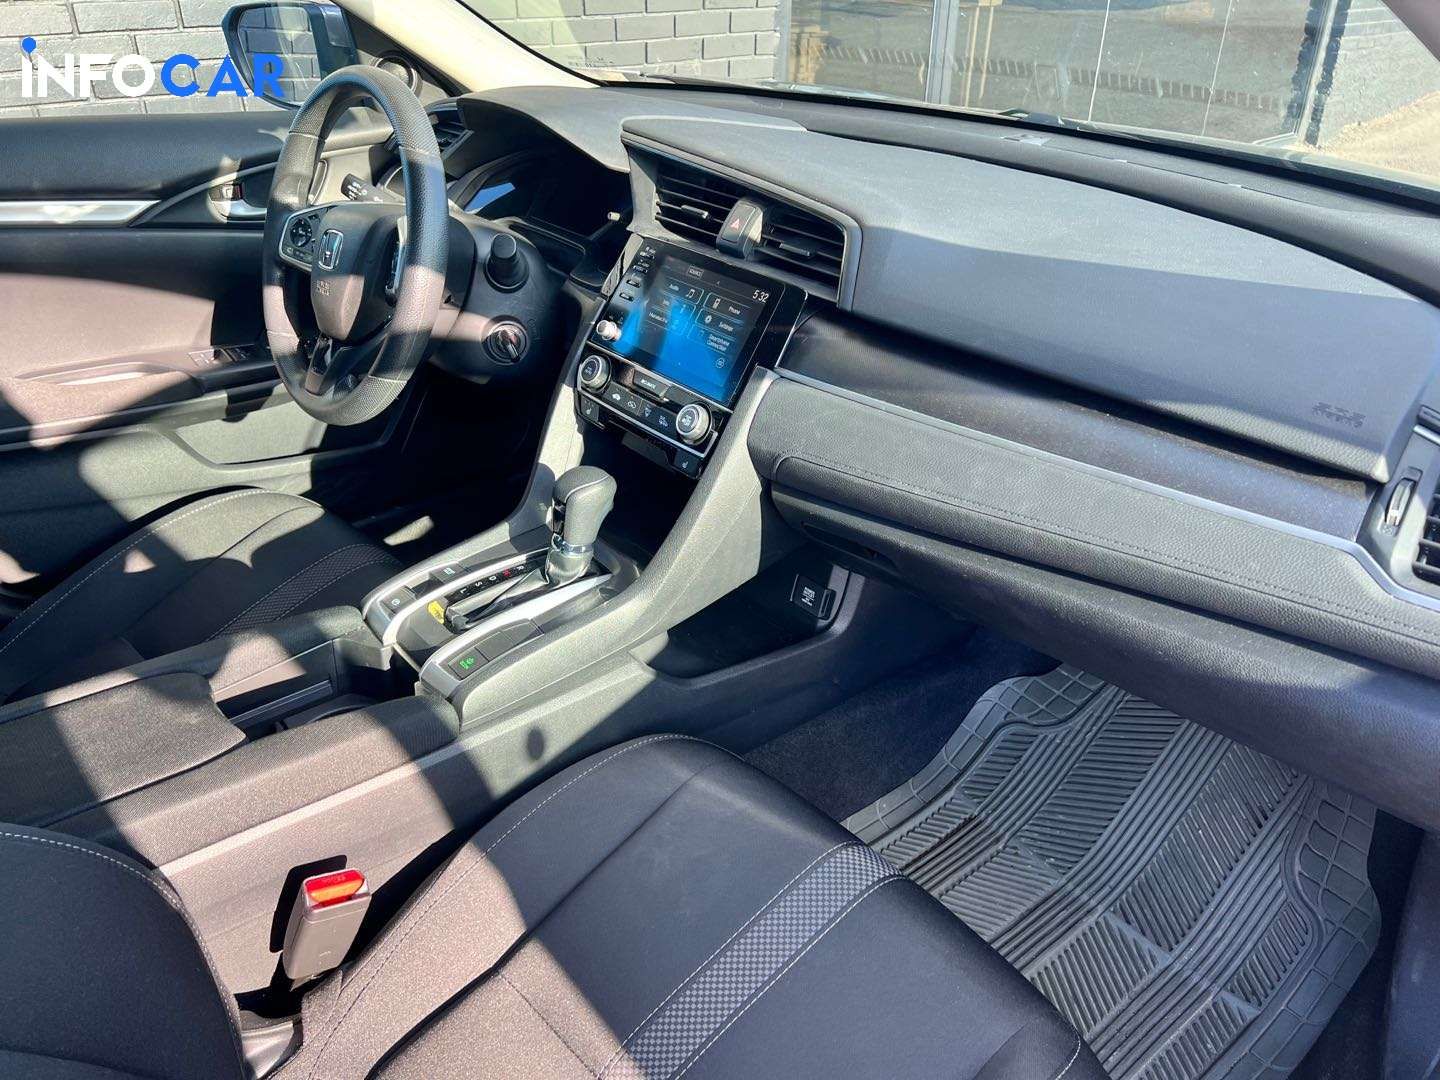 2020 Honda Civic LX - INFOCAR - Toronto Auto Trading Platform